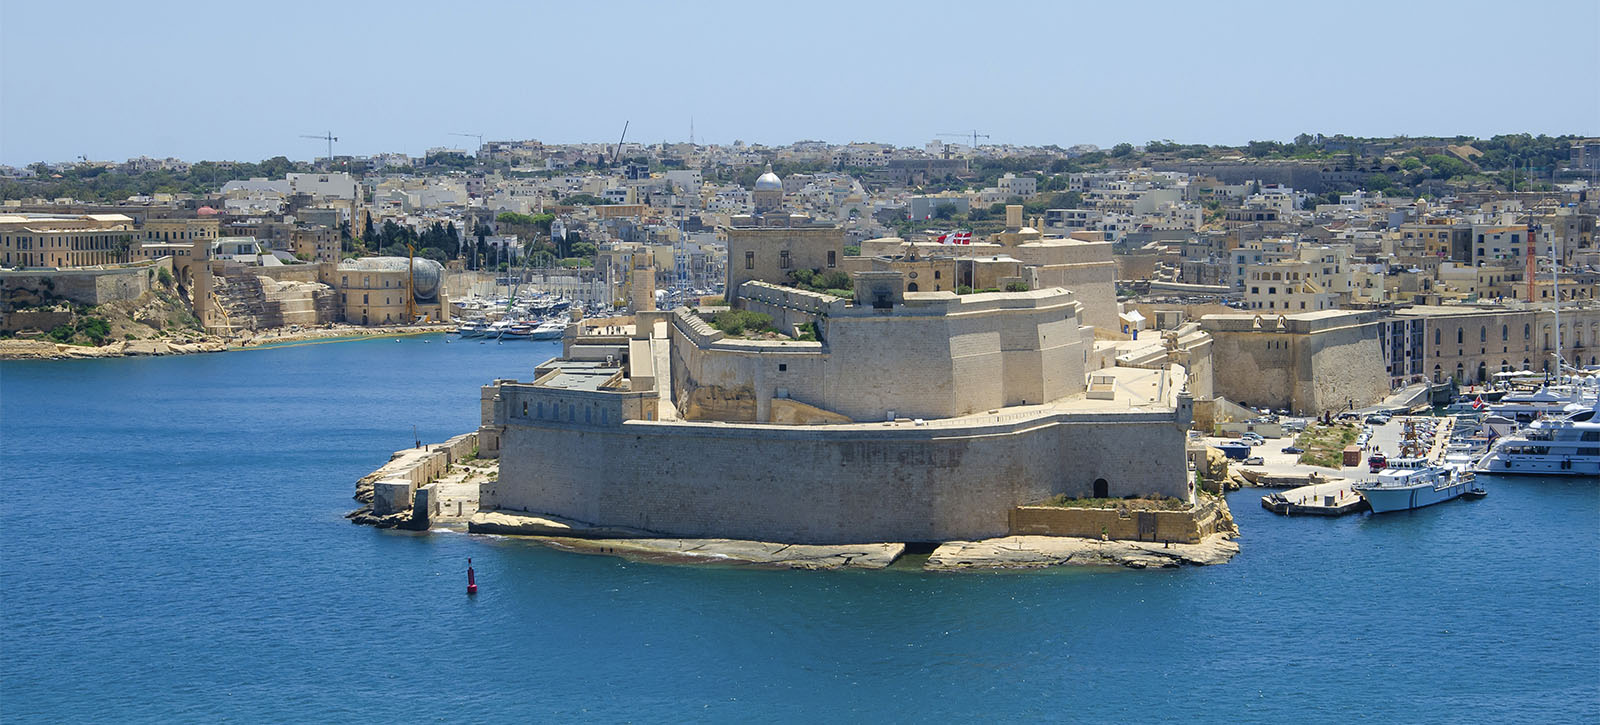 Malta Citizenship by Investment Program from €1.2 million.